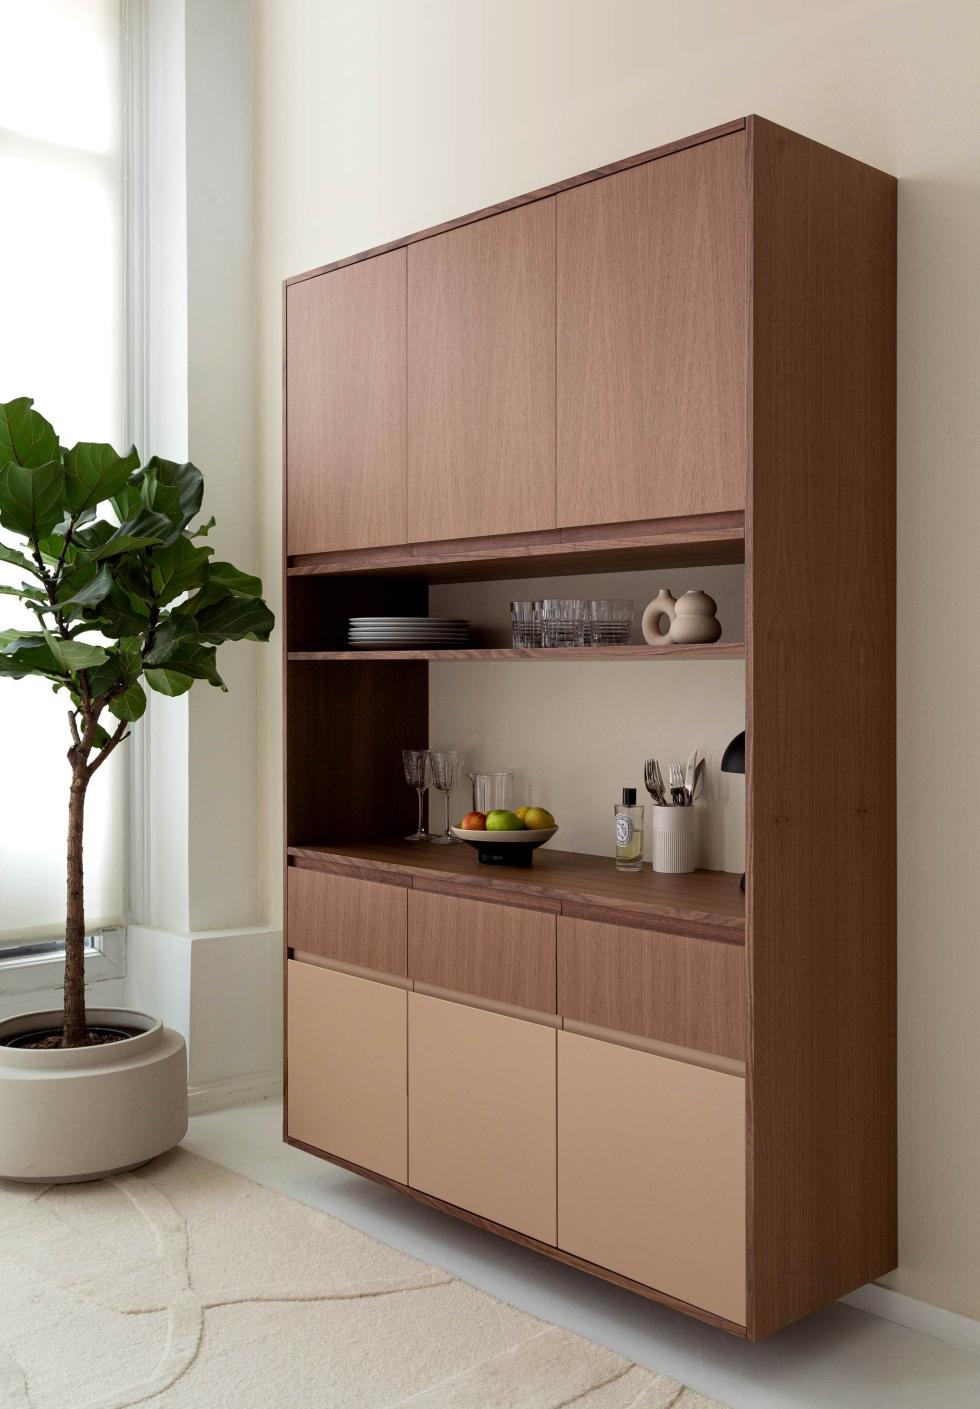 A china cupboard in natural walnut and Moka - useful information